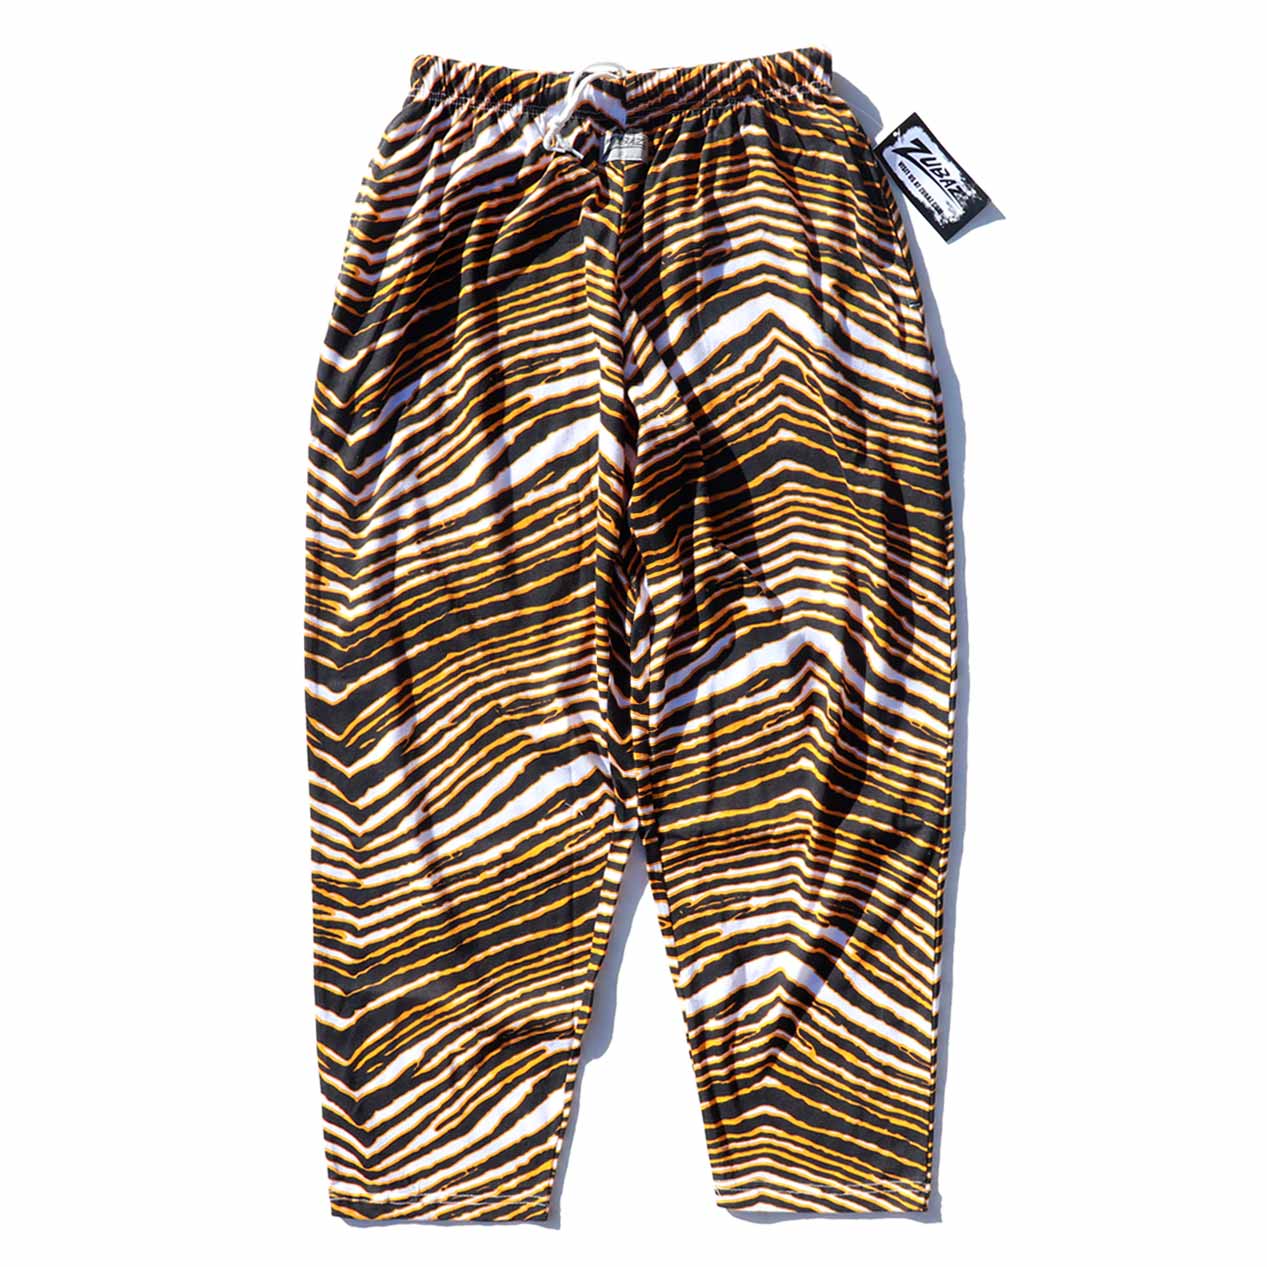 POST JUNK / 00's～ ZUBAZ Zebra Patterned Easy Pants [NOS] [M]